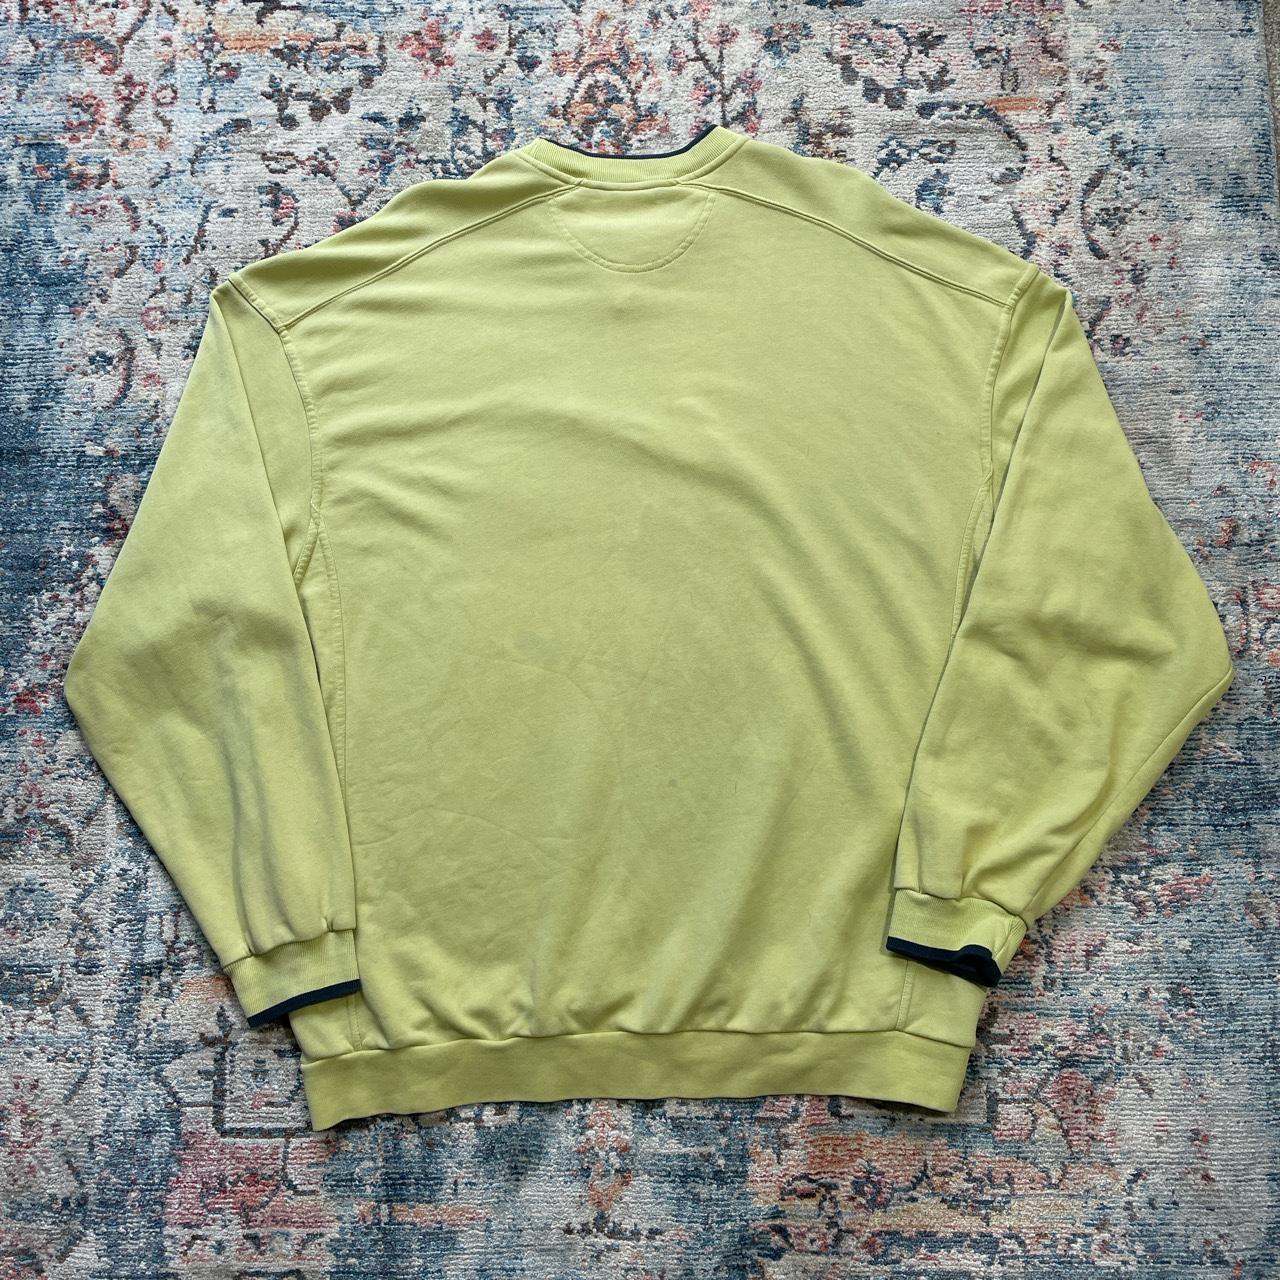 Vintage Nike Lime Green Swoosh Sweatshirt